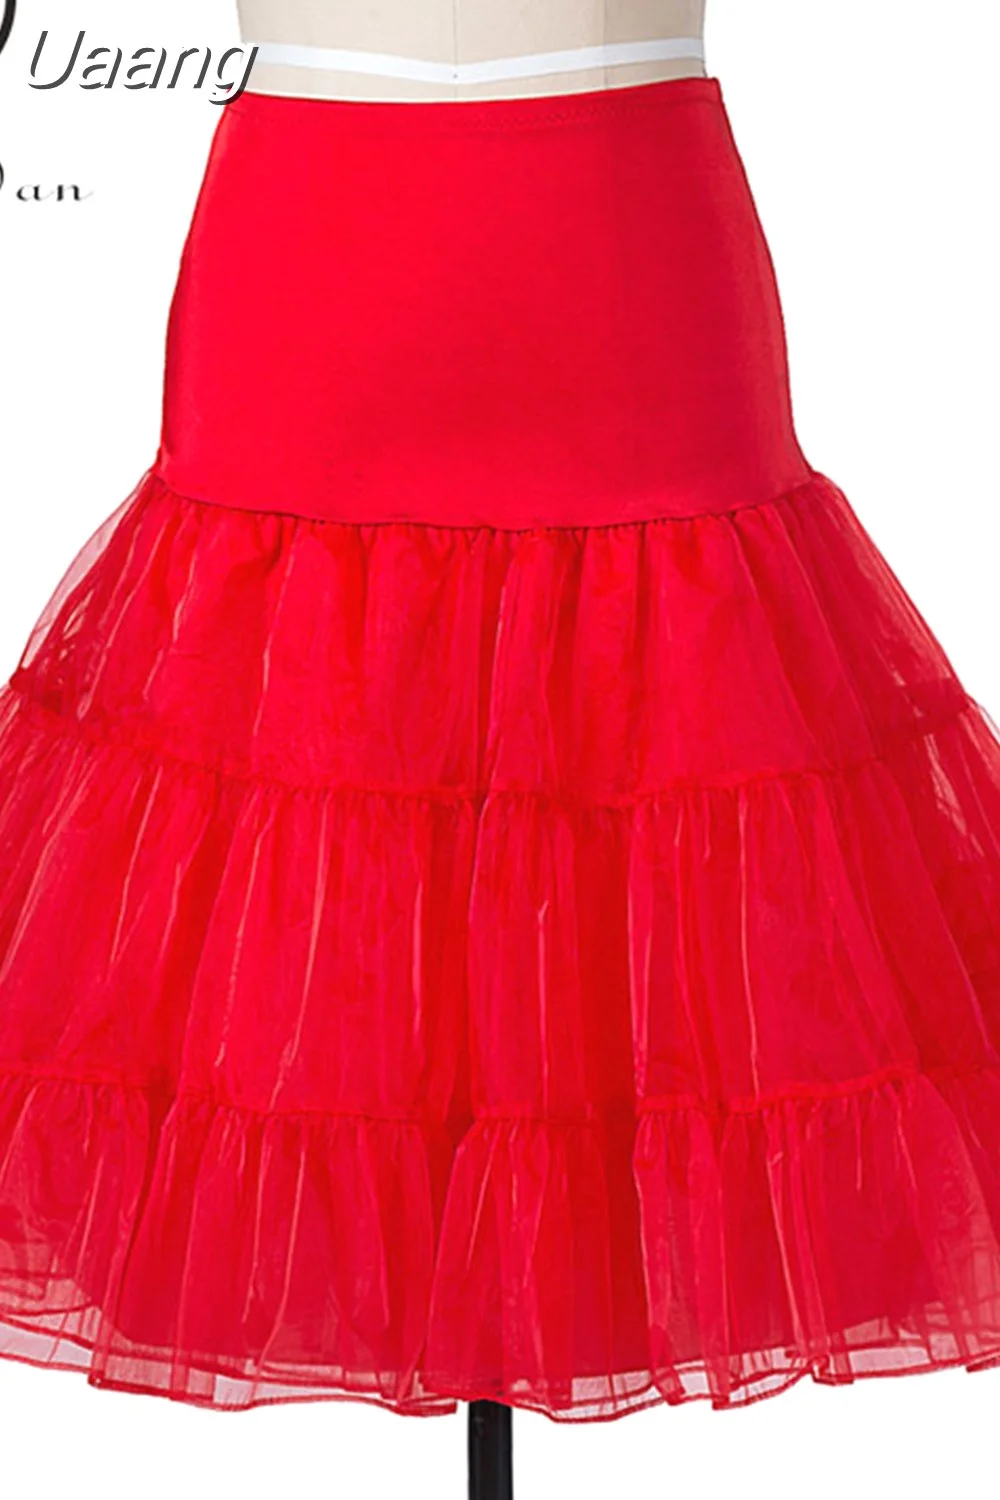 Uaang Dress Women Casual Elegant Print Red Xmas Party Dress Vintage Retro O-neck Short Sleeve A-Line Vestidos Robe Femme